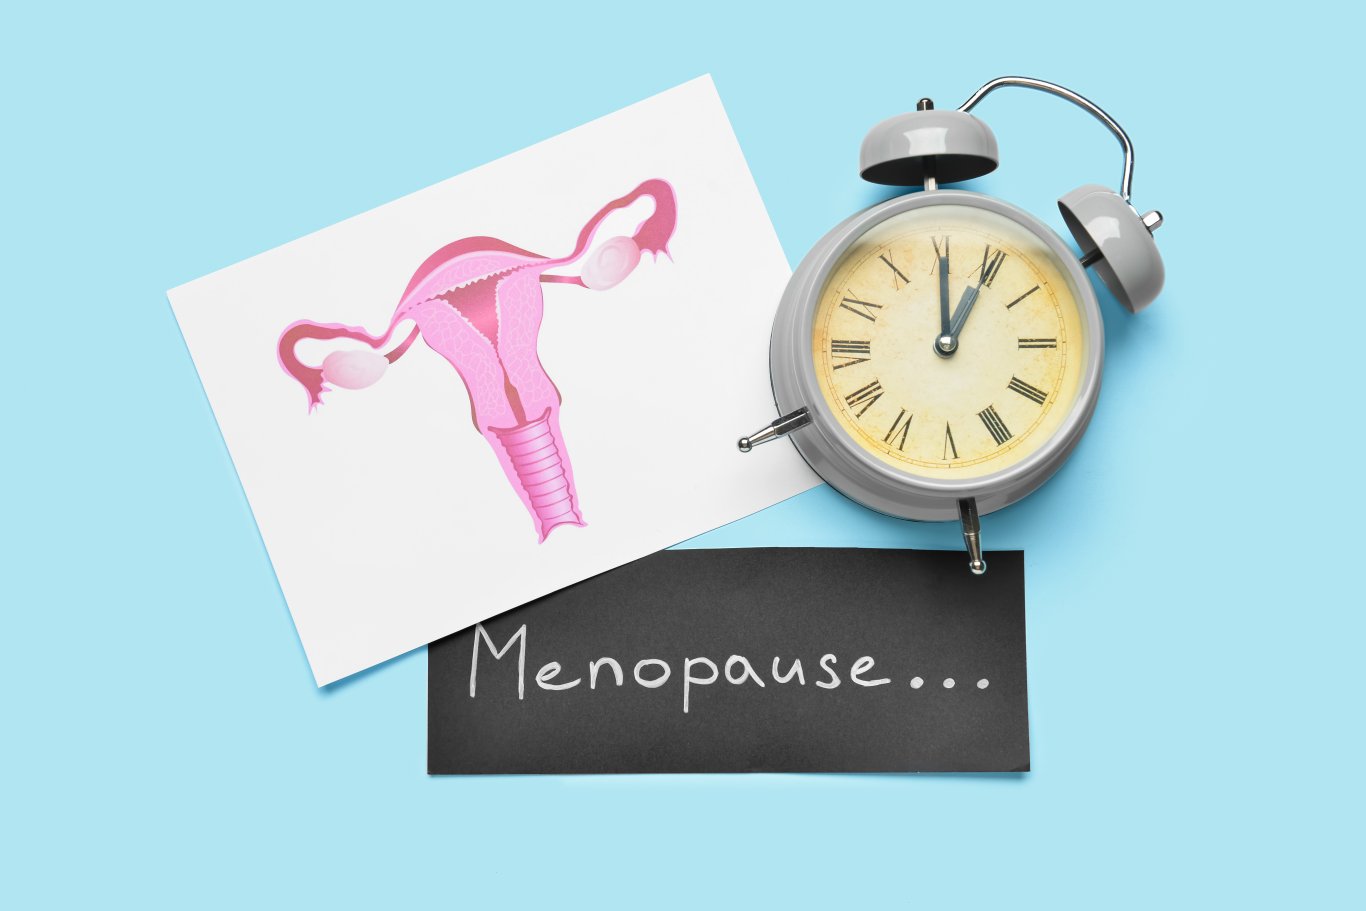 Menopauseと書かれた紙と時計と青い背景